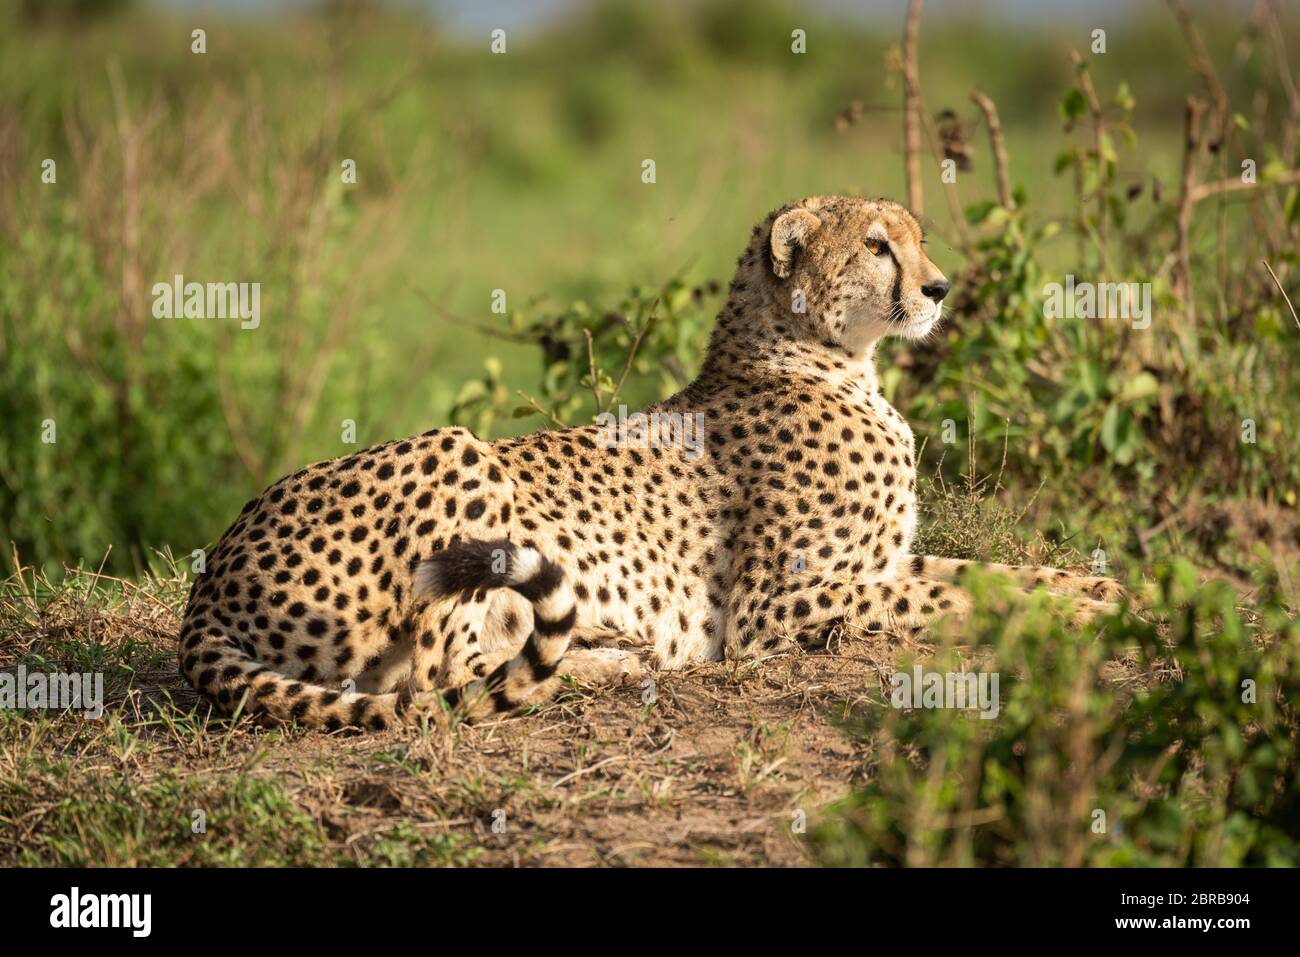 Cheetah lies on dirt bank among bushes Stock Photo